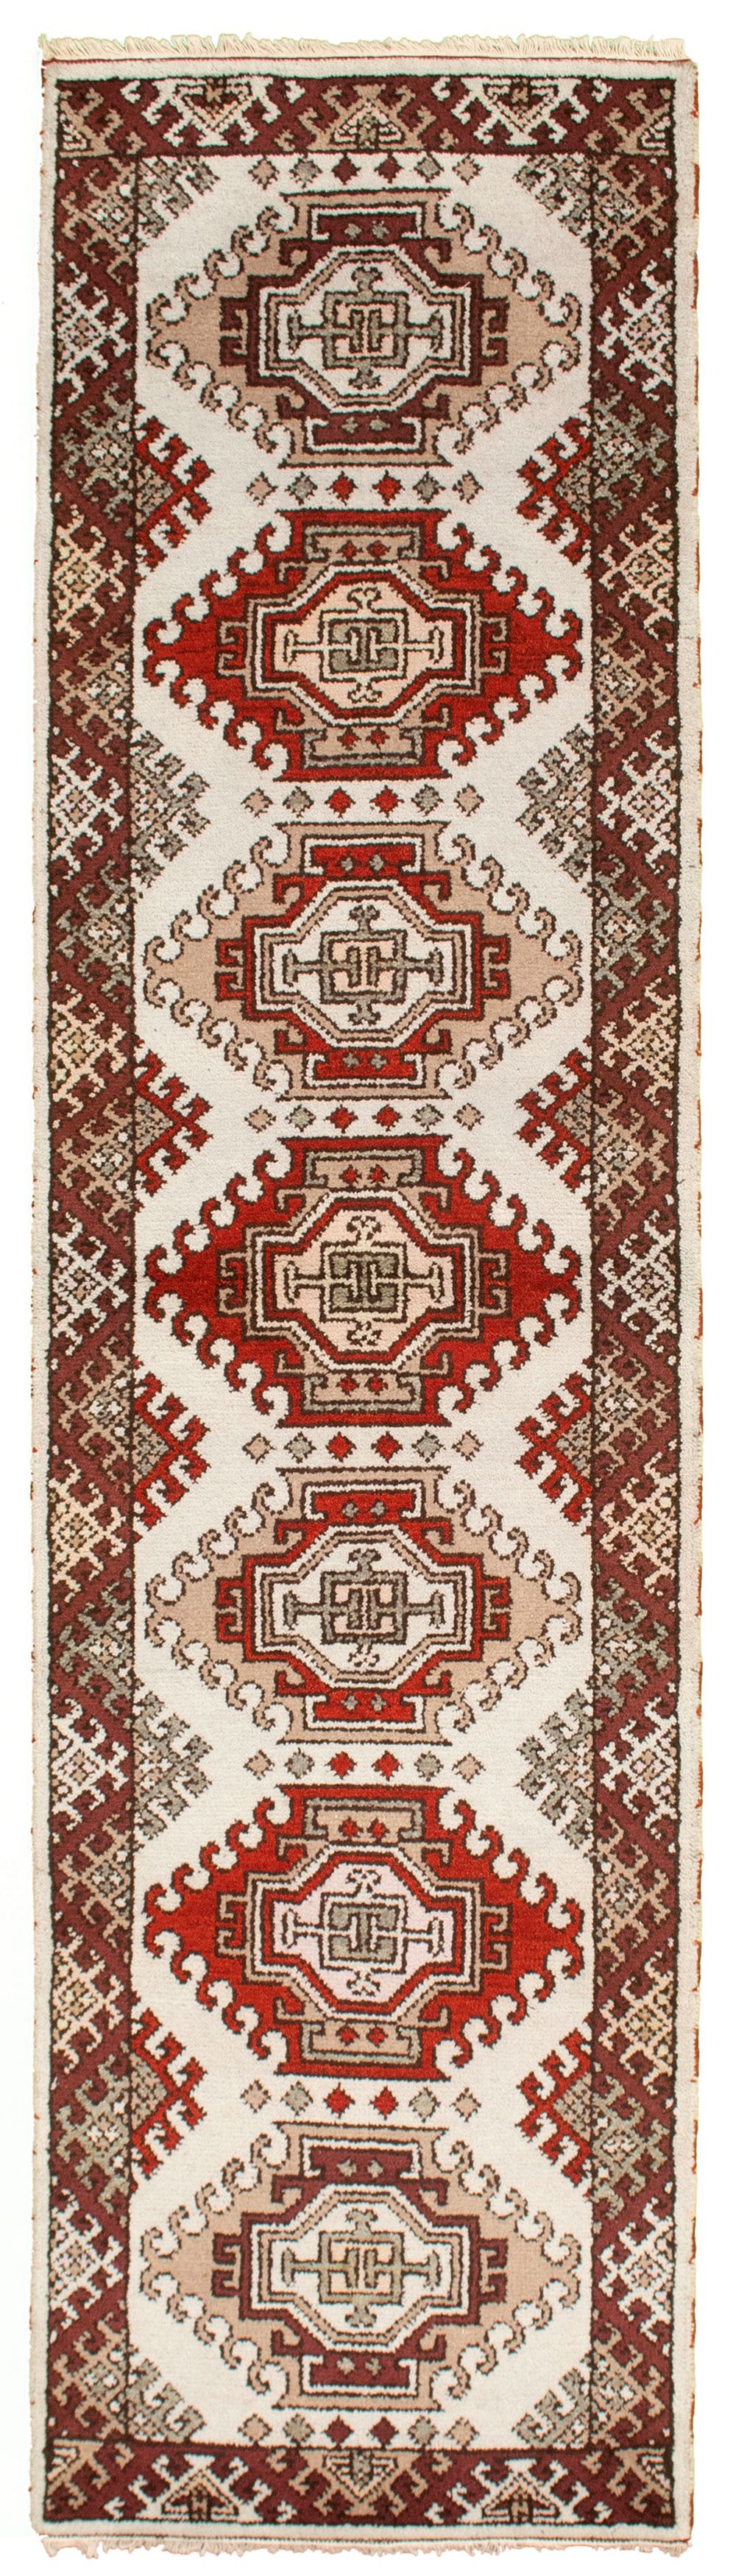 Hand-knotted Royal Kazak Dark Red Wool Rug 2'8" x 9'10"  Size: 2'8" x 9'10"  